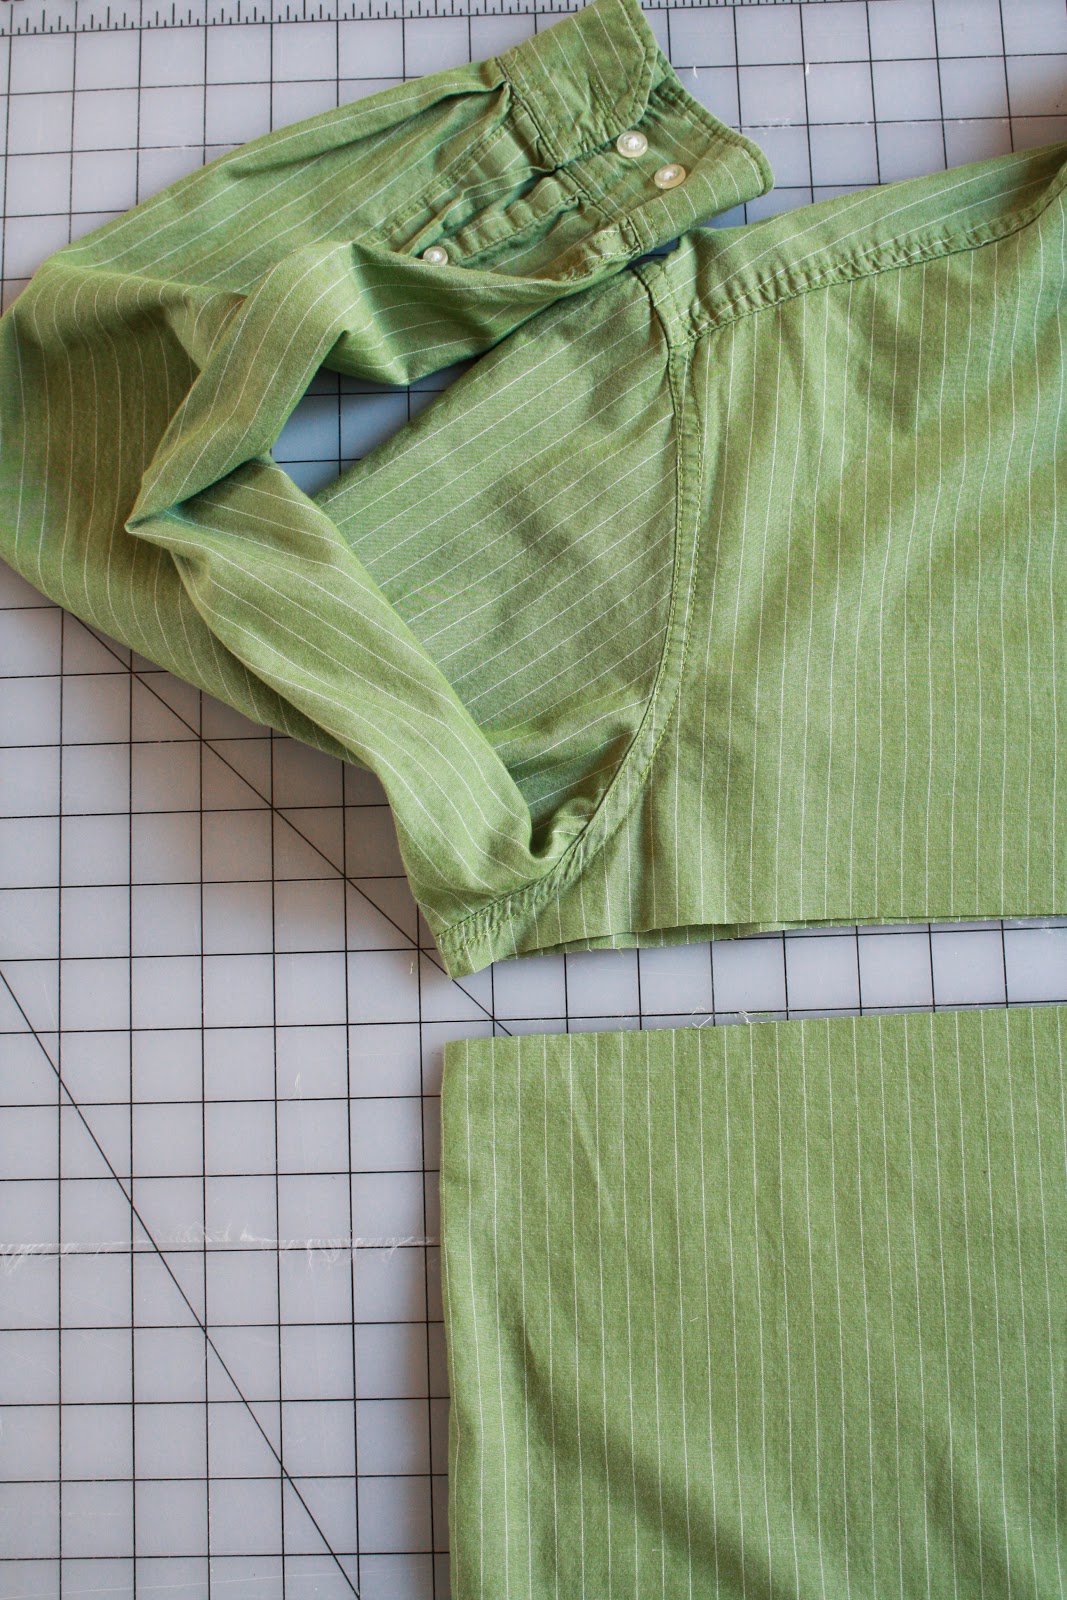 Simple Things Notebook: Making: Shirt Skirt Tutorial